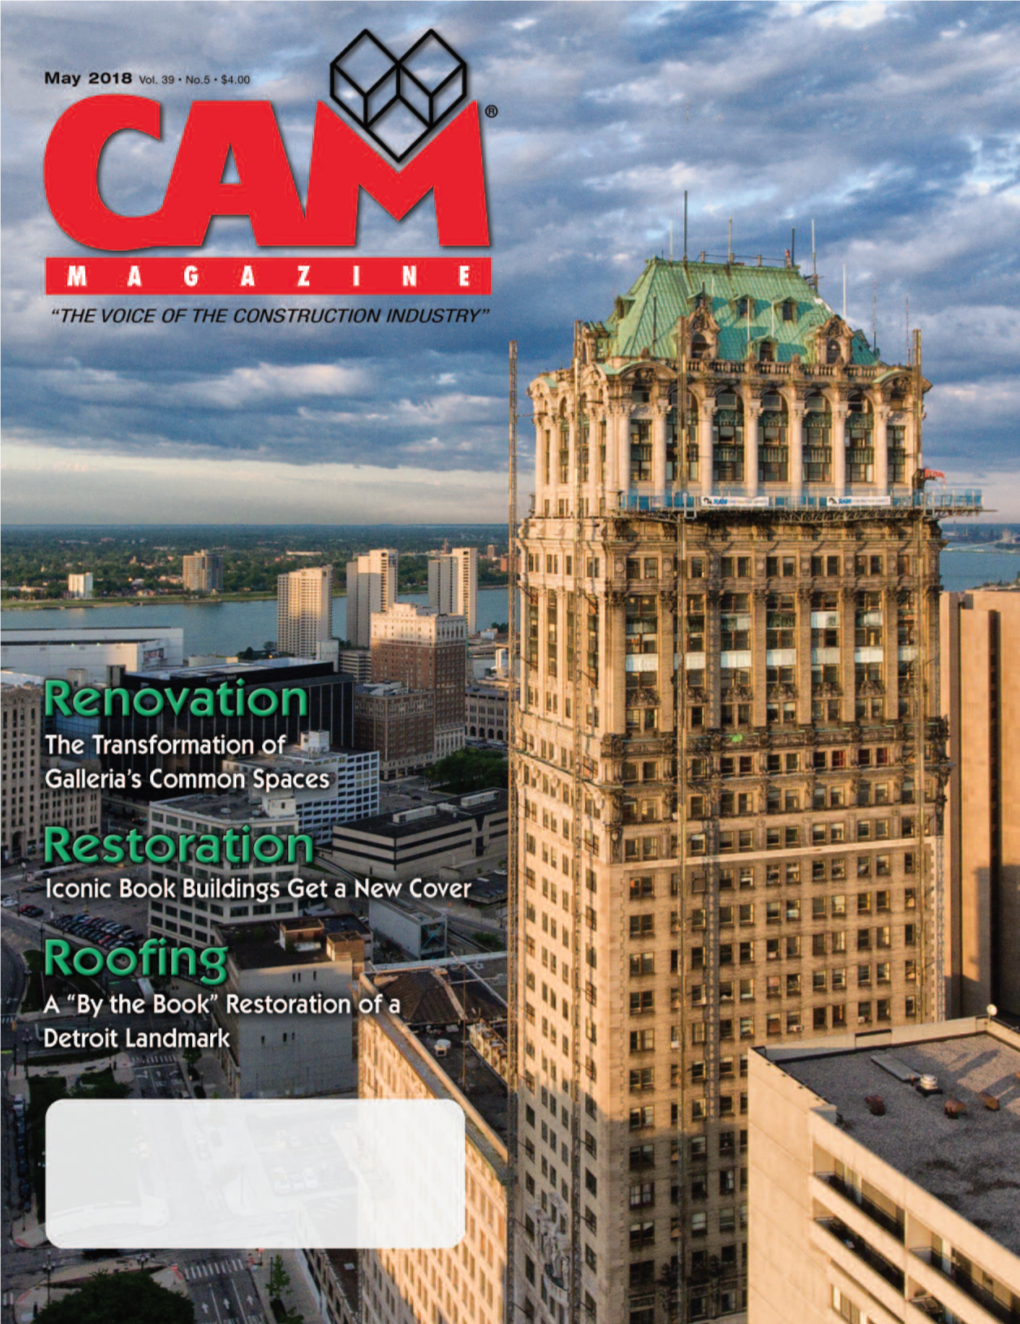 CAM MAGAZINE EDITORIAL ADVISORY COMMITTEE Gary Boyajian Vice Chairman Jennifer Panning Division 8 Solutions, Inc